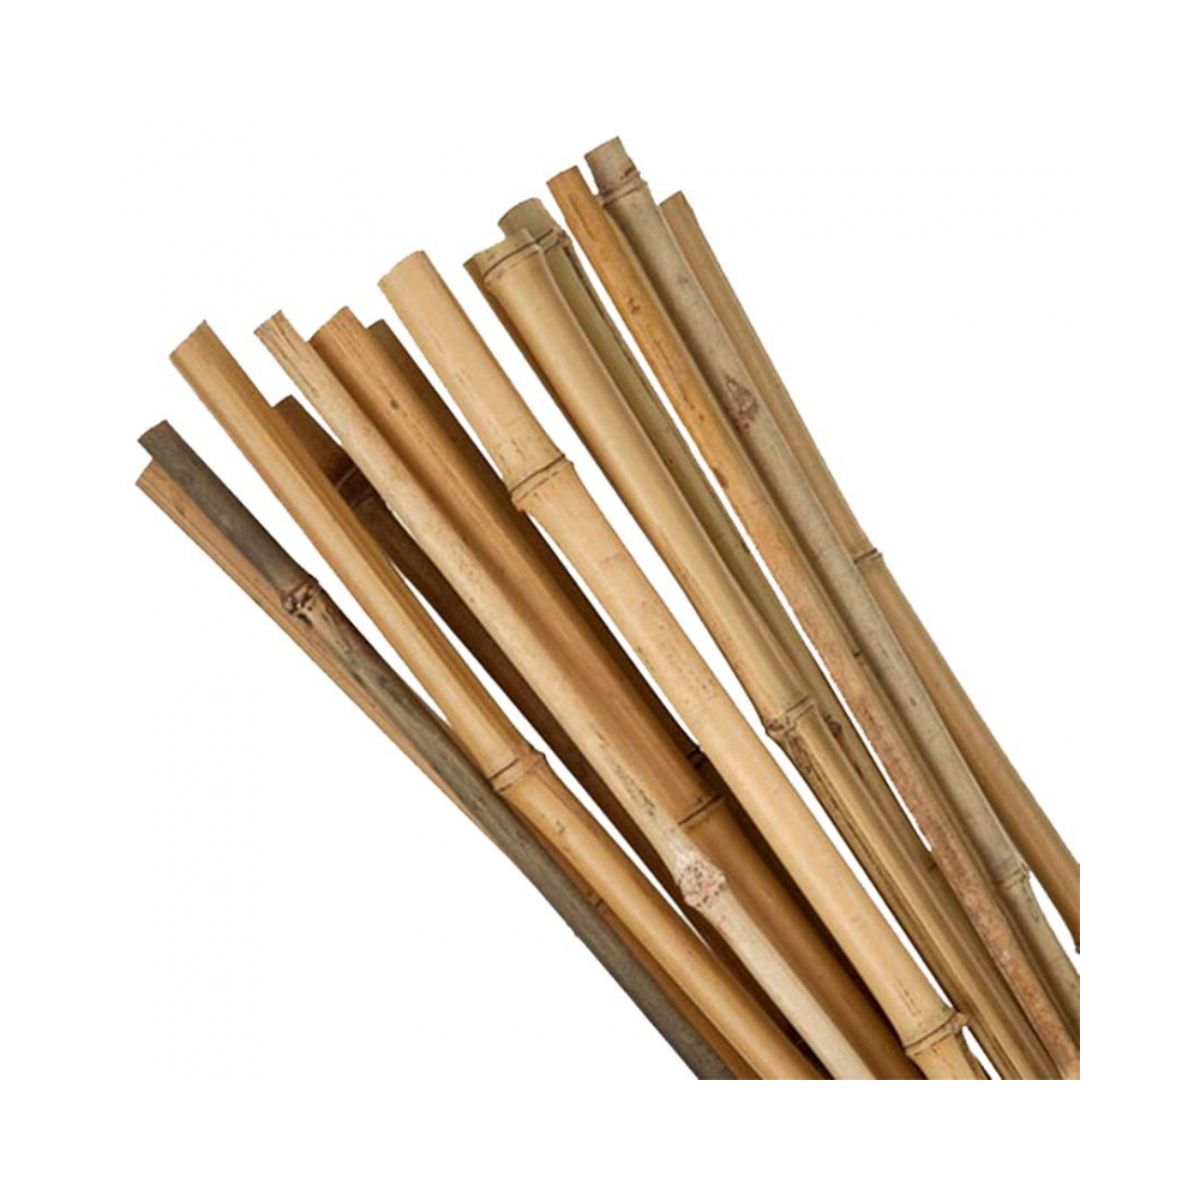 Unelte de gradinarit - Suport/arac bambus KBT 0600/08-10 mm, hectarul.ro